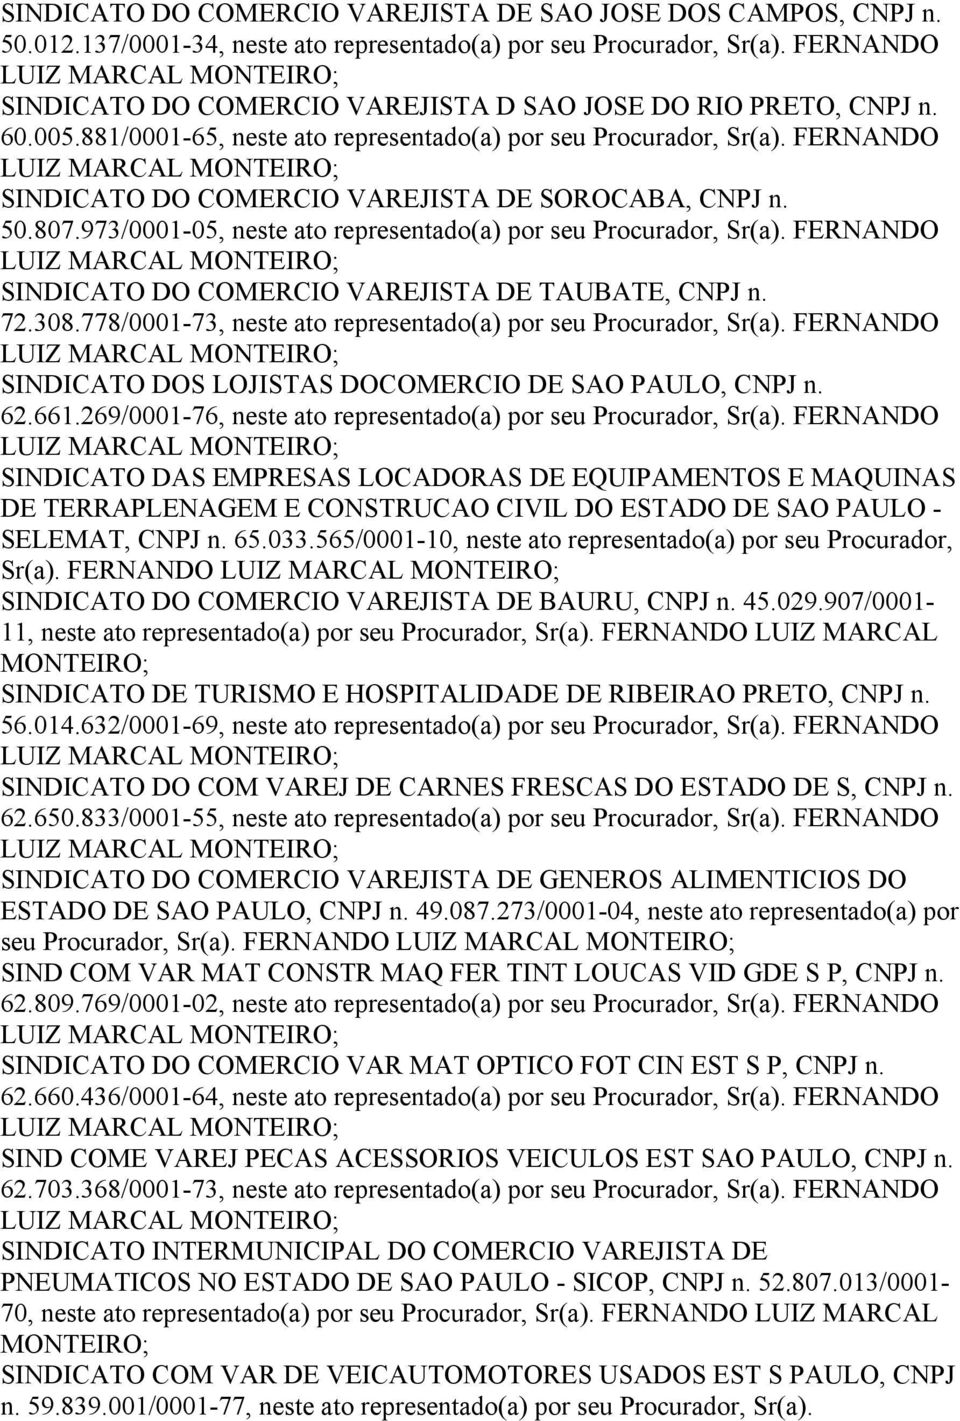 FERNANDO SINDICATO DO COMERCIO VAREJISTA DE TAUBATE, CNPJ n. 72.308.778/0001-73, neste ato representado(a) por seu, Sr(a). FERNANDO SINDICATO DOS LOJISTAS DOCOMERCIO DE SAO PAULO, CNPJ n. 62.661.